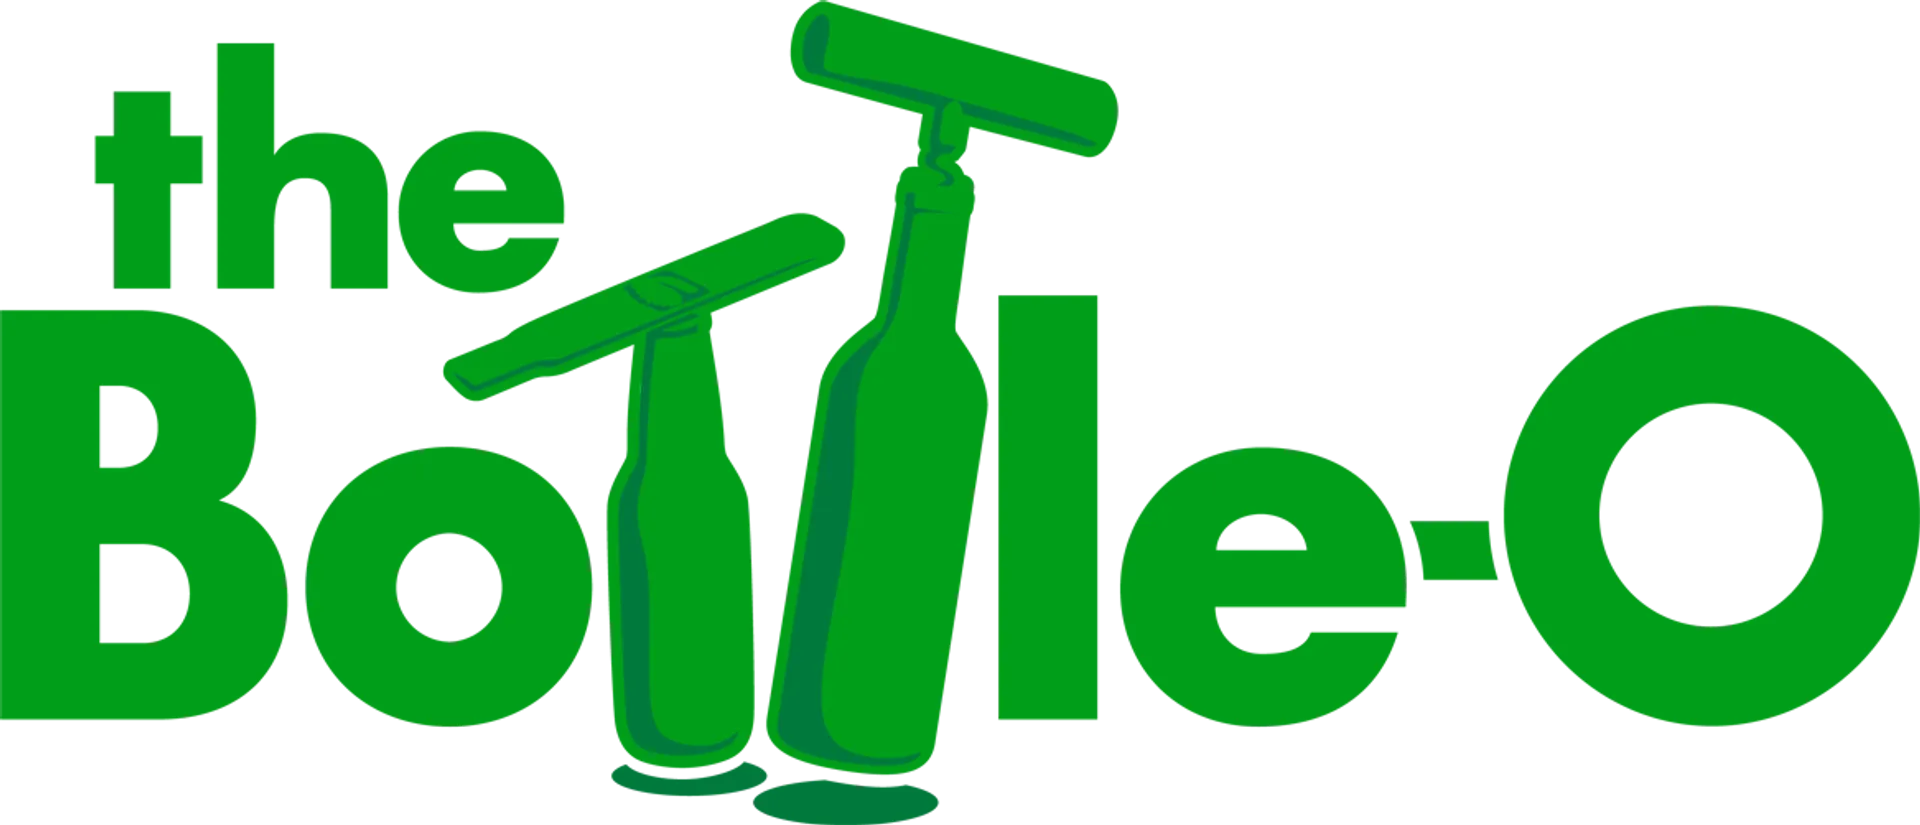 THE BOTTLE-O logo of current flyer